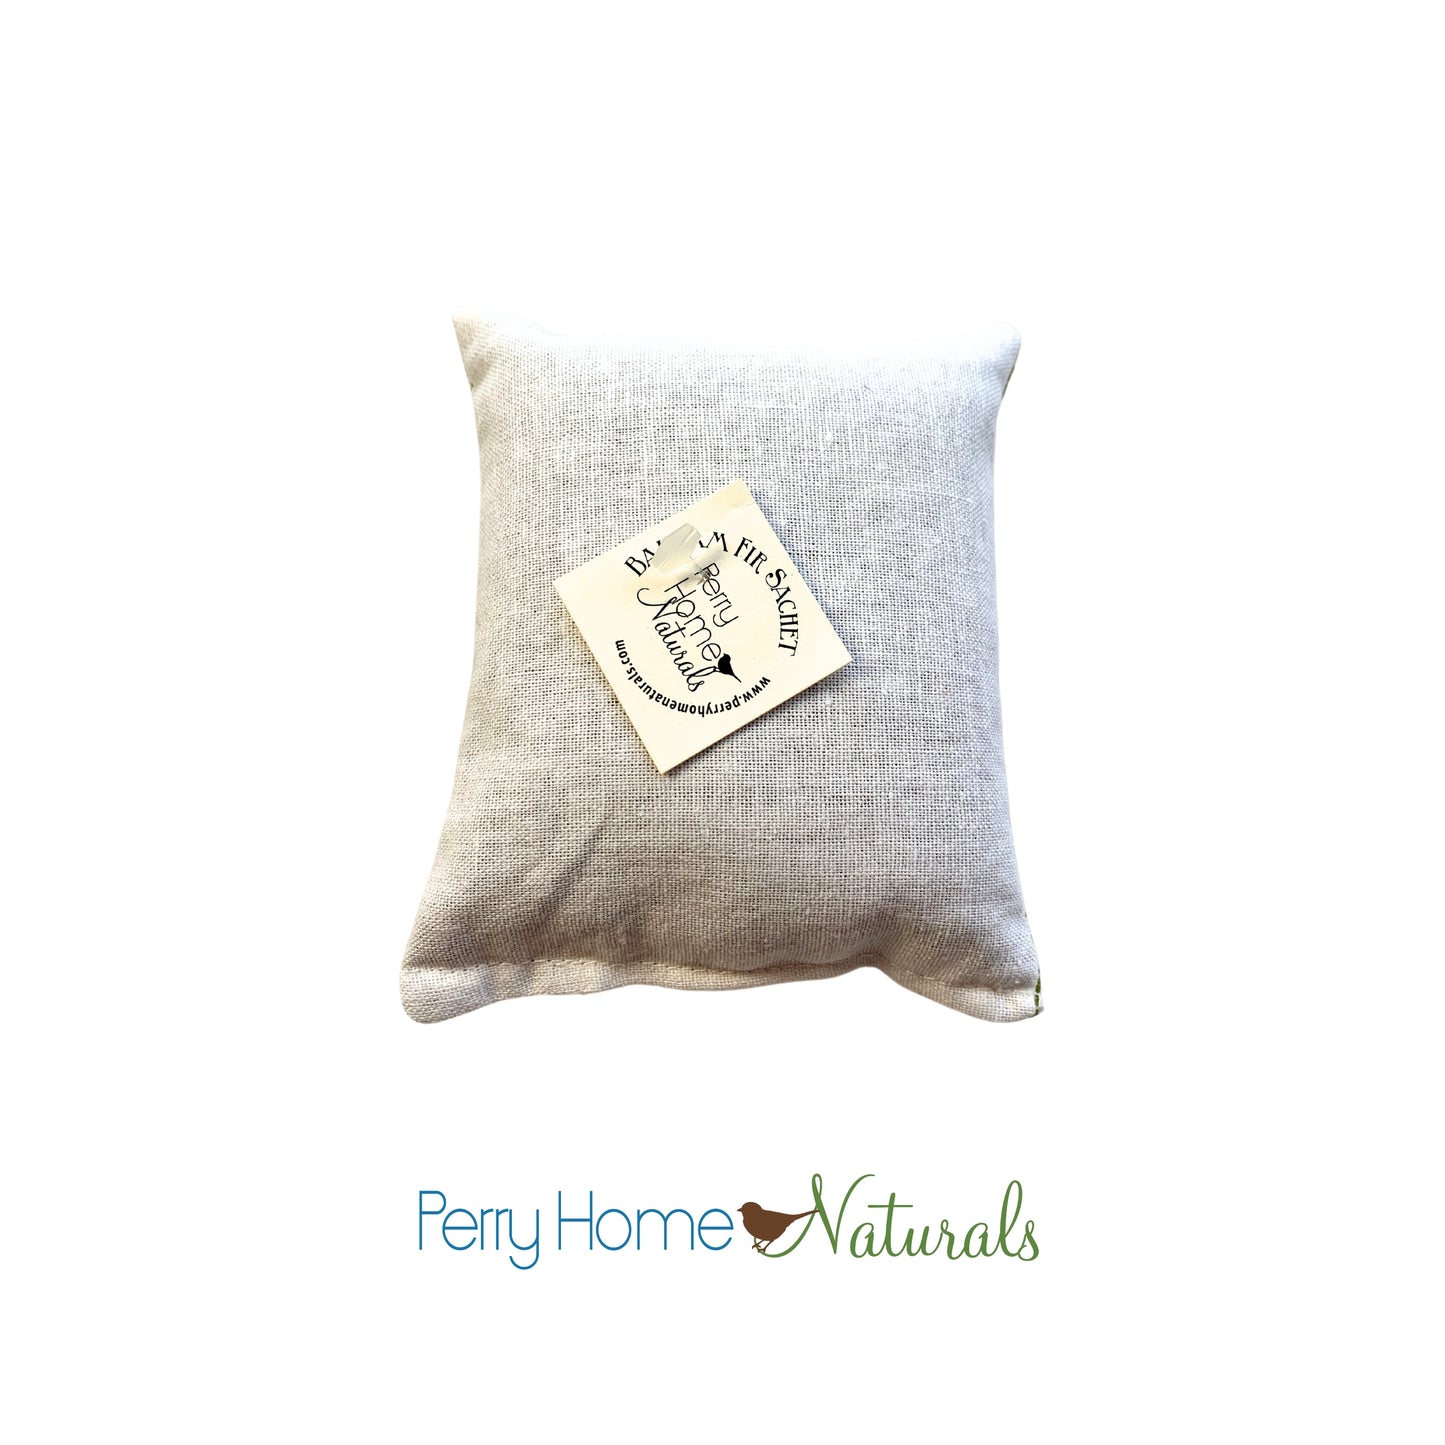 Maine Balsam Pillow - Little Thicket Design - Medium Cotton Print